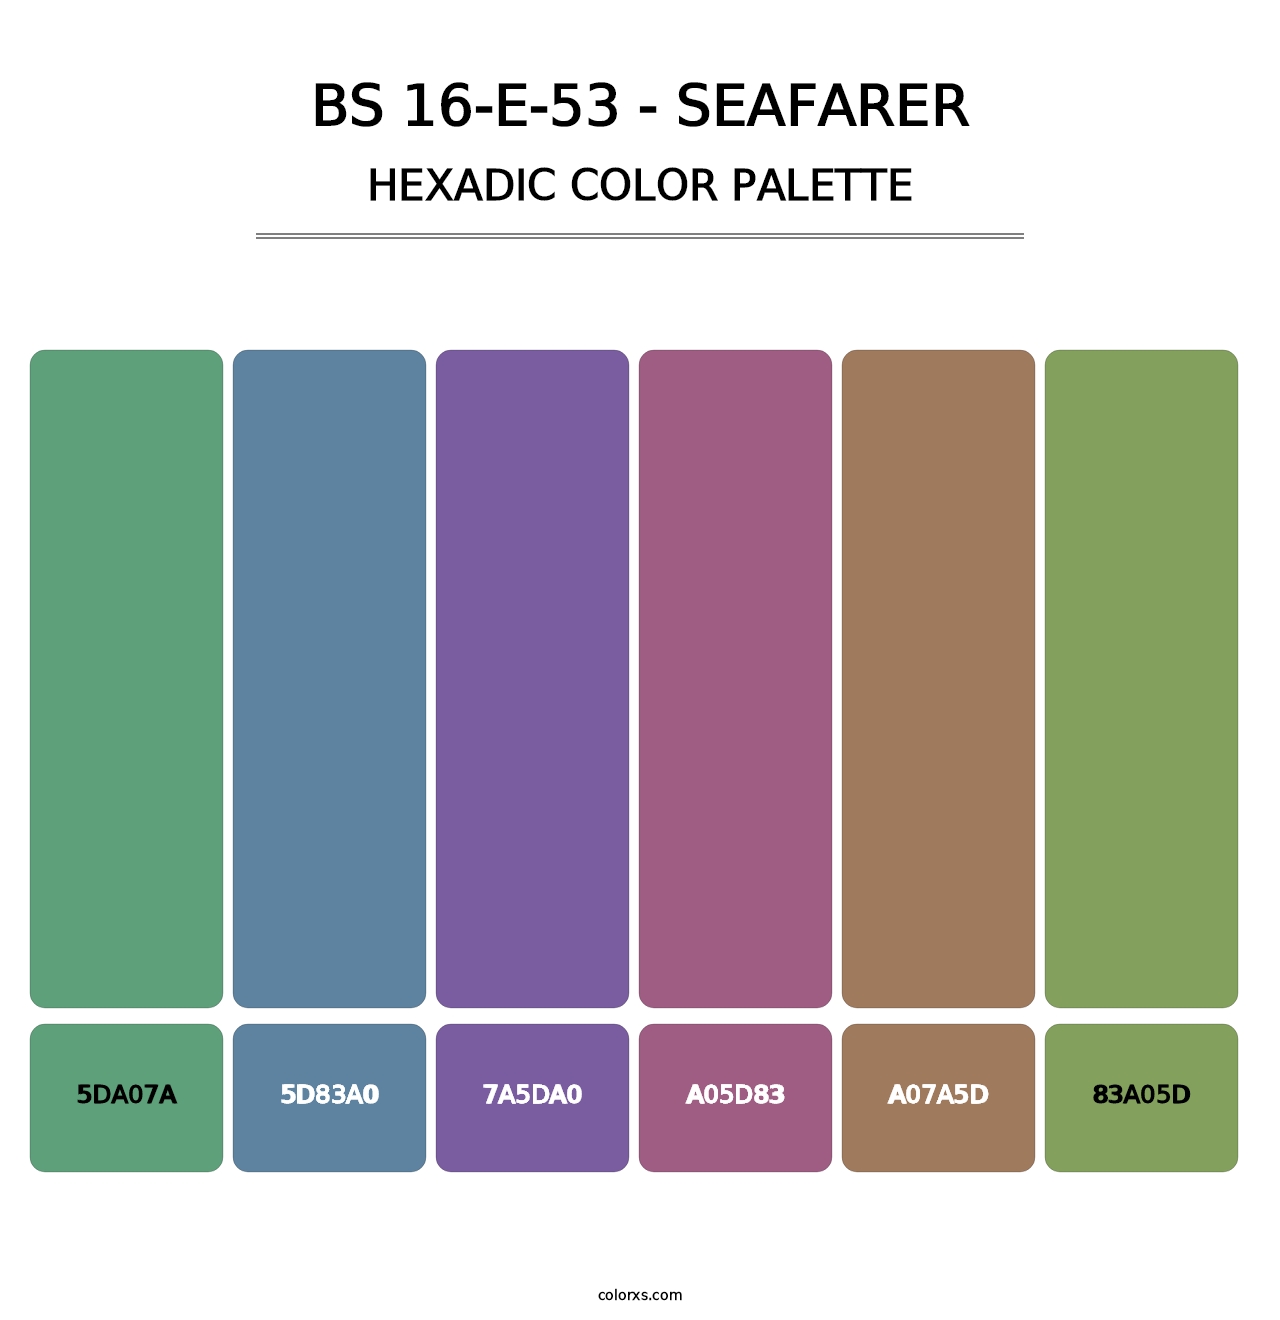 BS 16-E-53 - Seafarer - Hexadic Color Palette